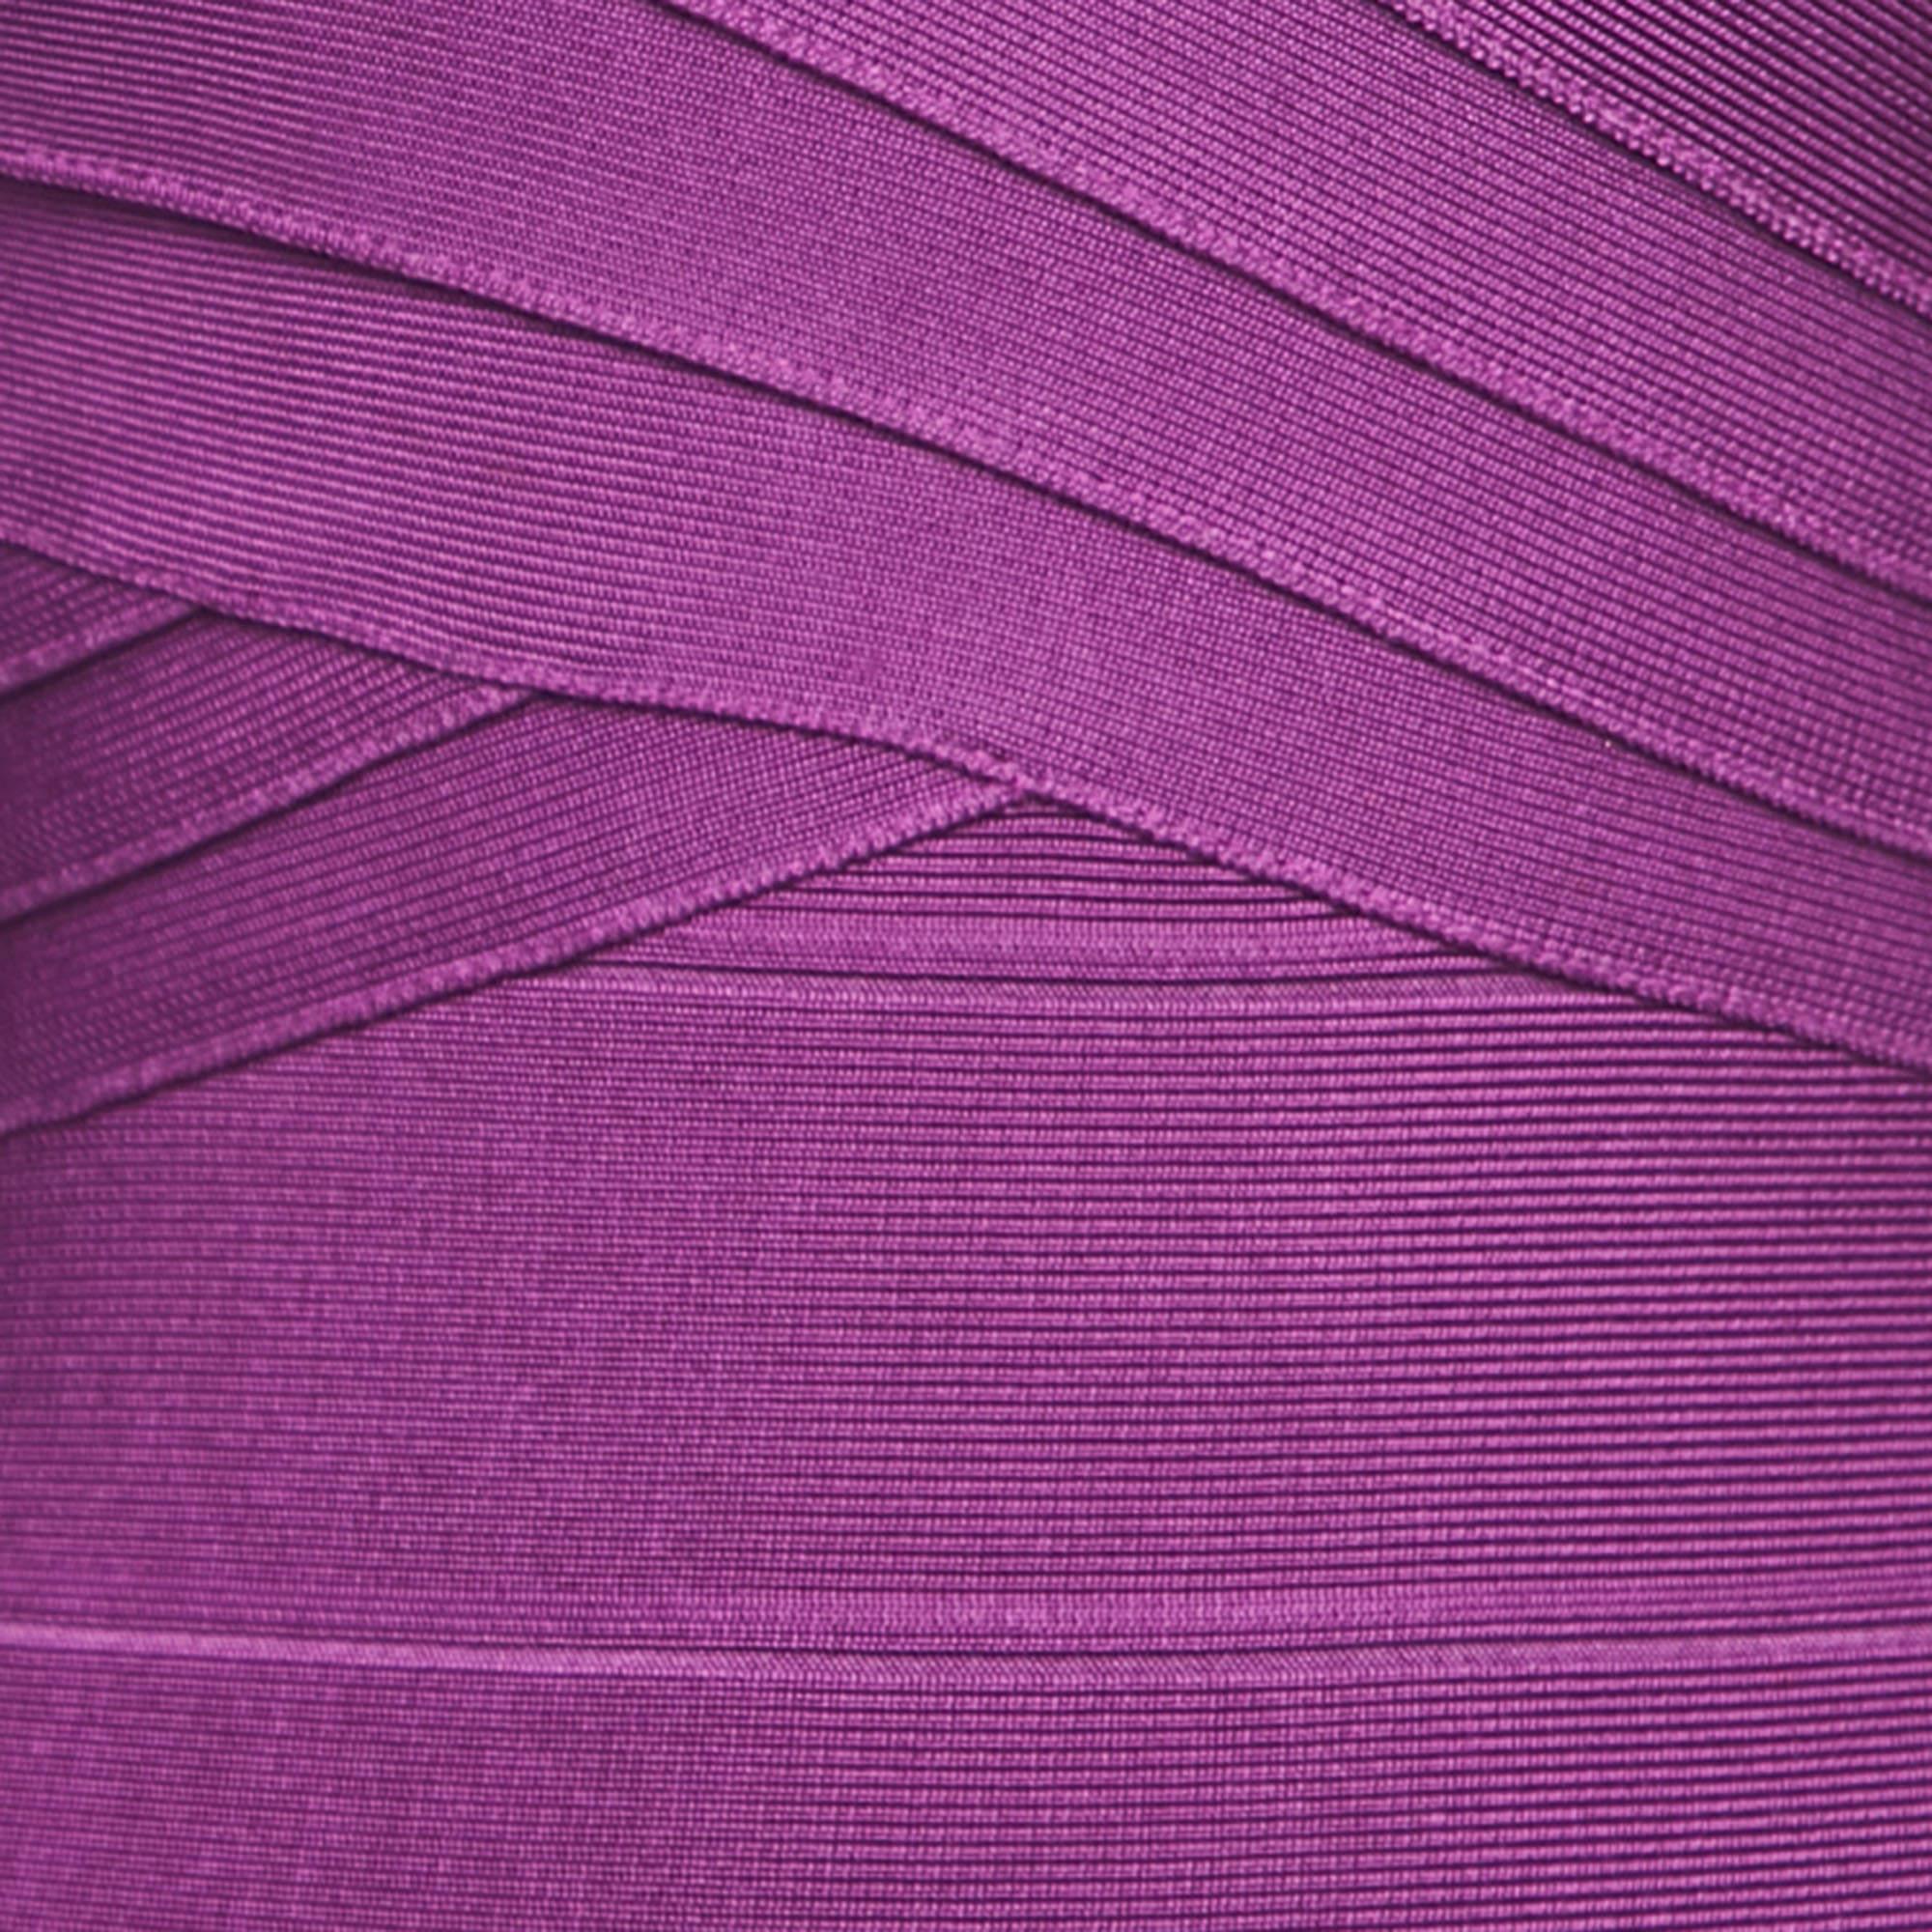 herve leger purple bandage dress